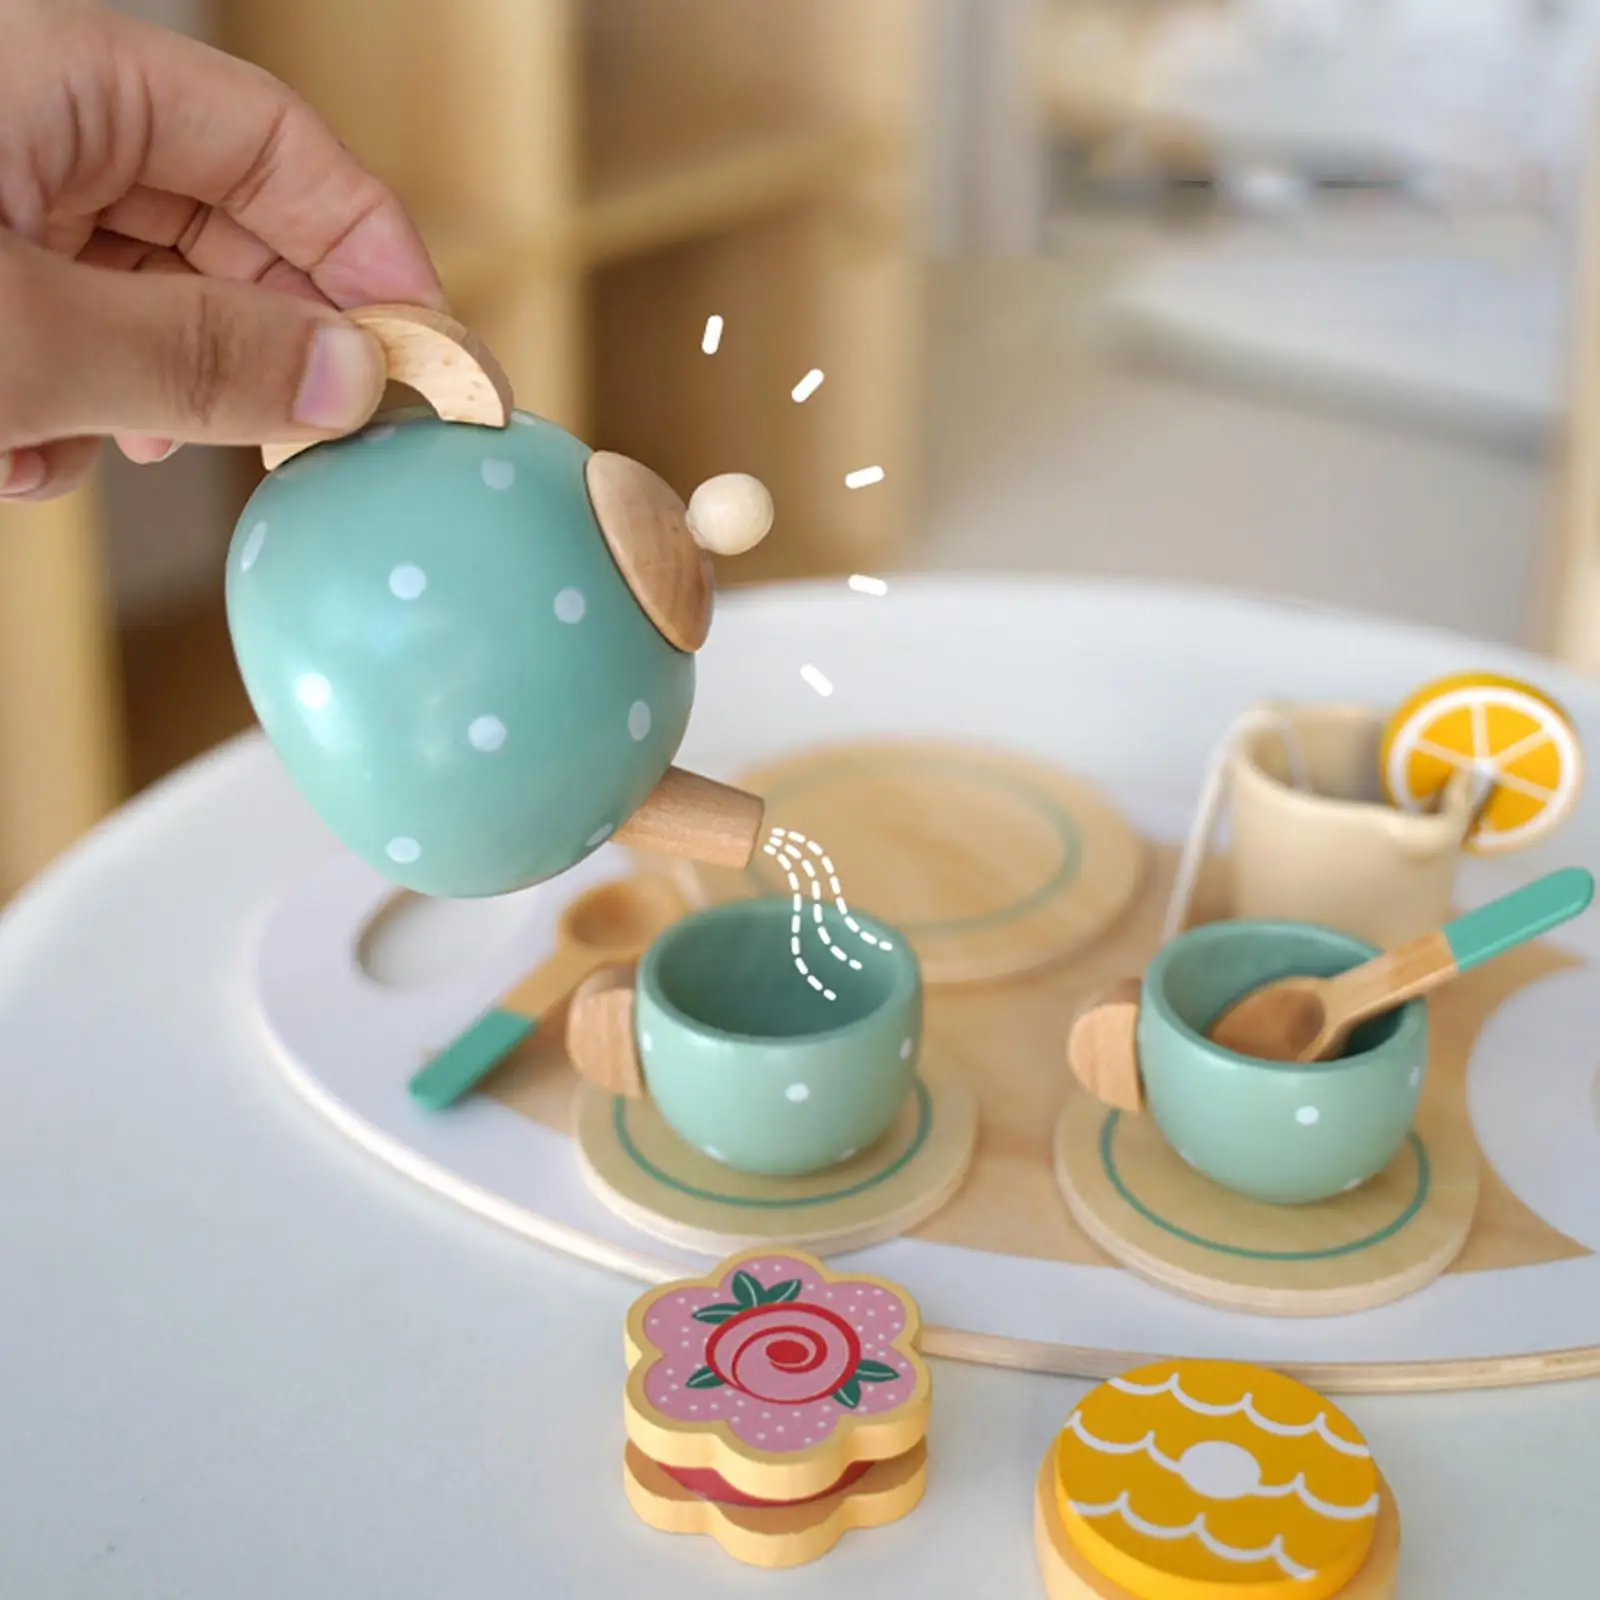 15x Tea Party Tableware Kitchen Playset for Children Preschool Kids